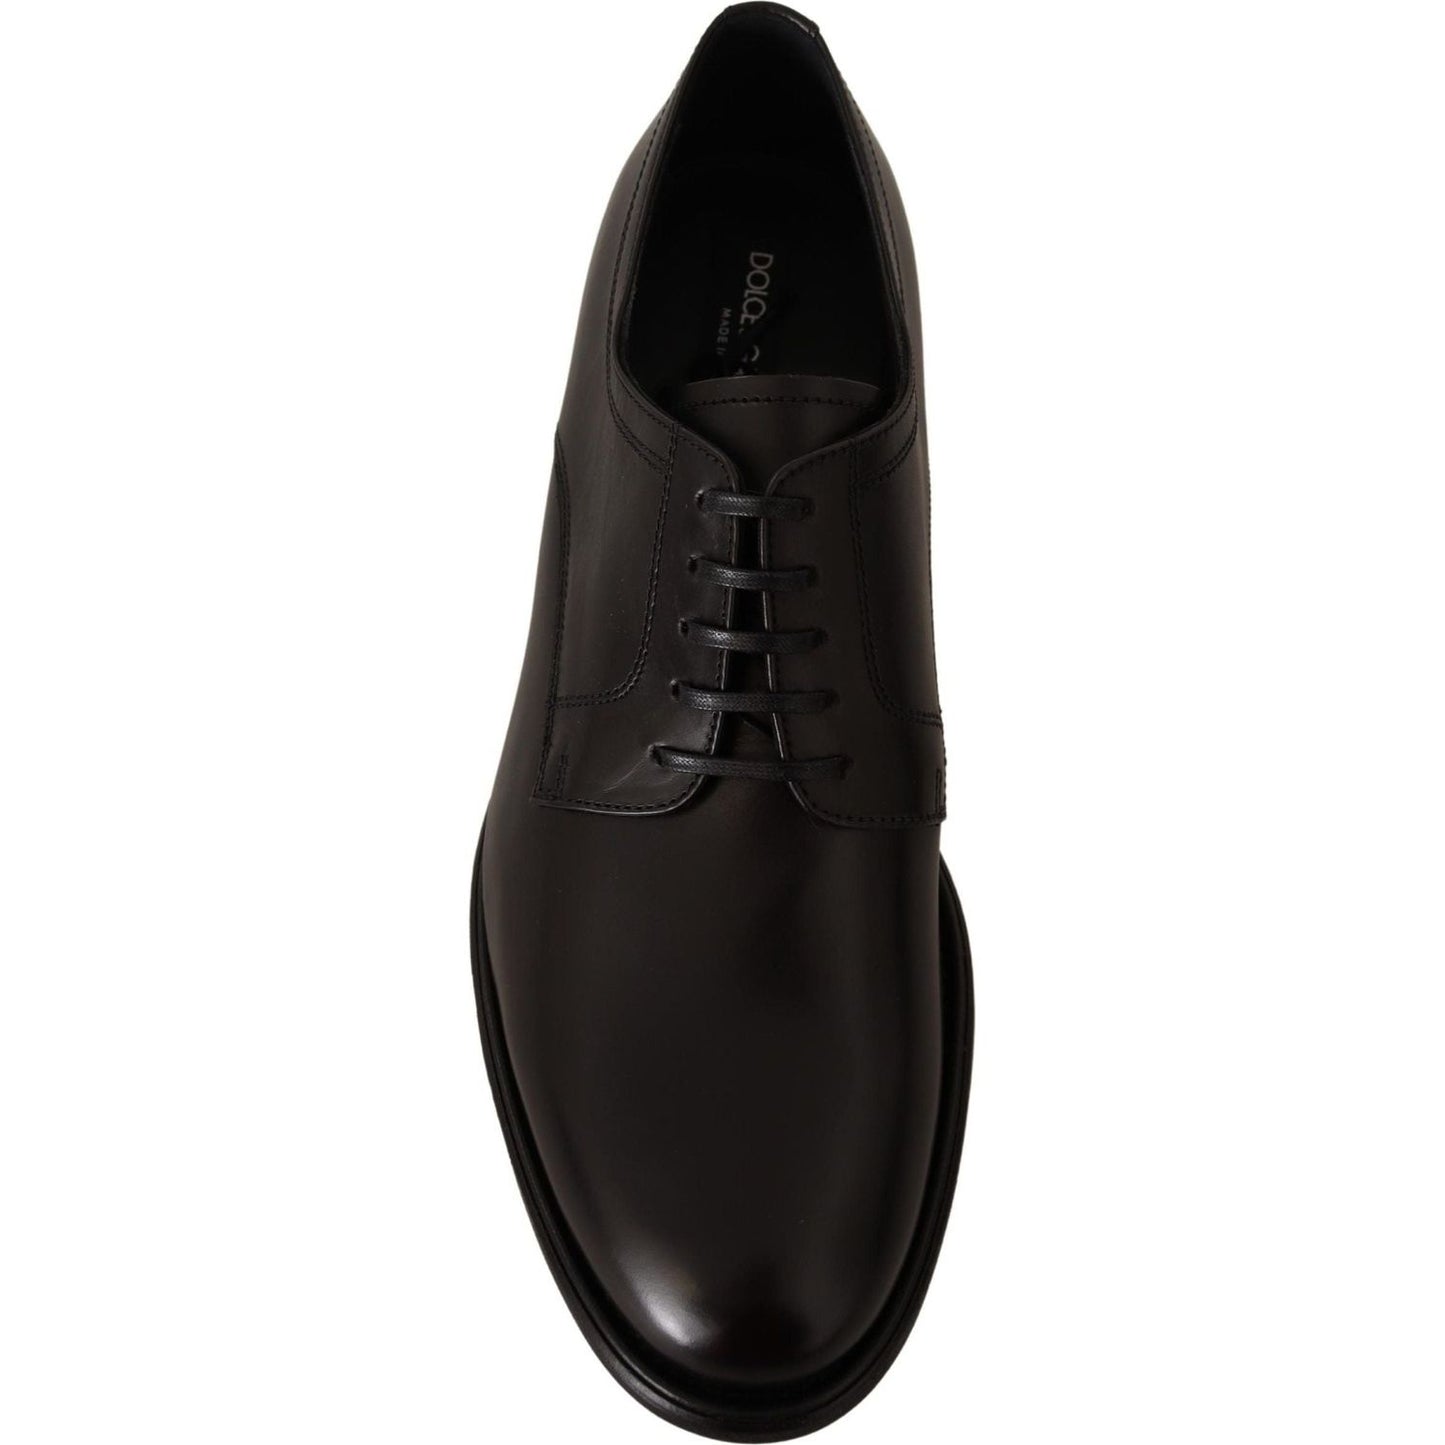 Dolce & Gabbana Elegant Black Leather Formal Derby Shoes black-leather-lace-up-mens-formal-derby-shoes IMG_4949-1-scaled-3eba92c5-92a.jpg